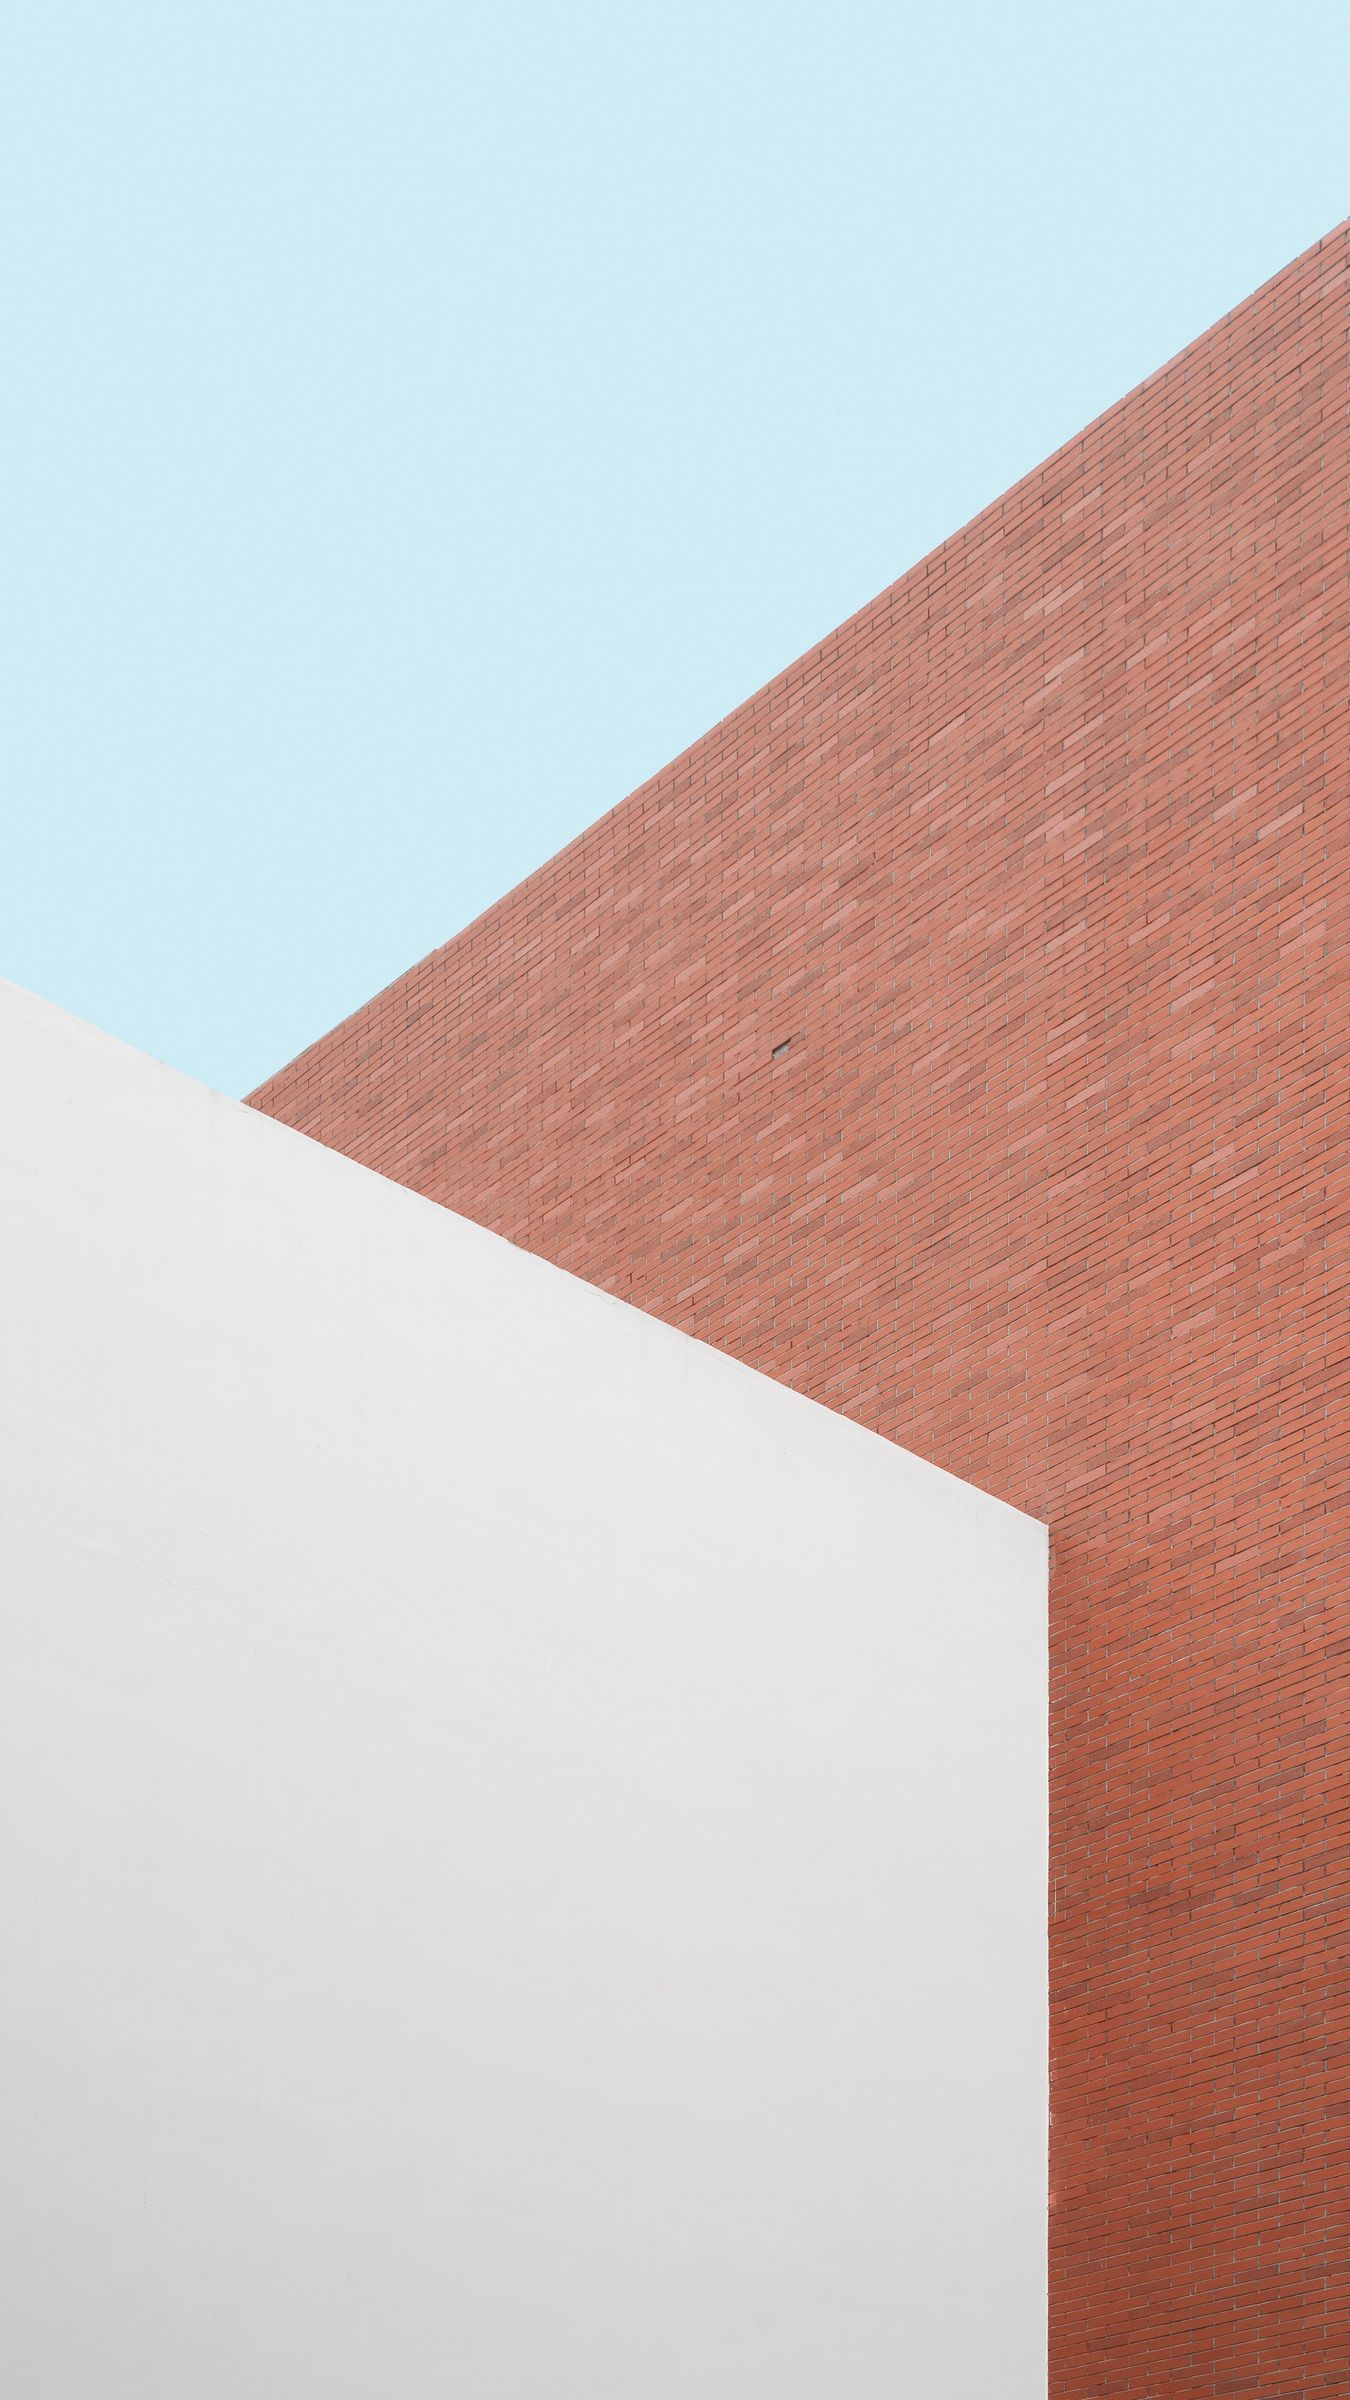 Minimalist Architecture Wallpaper Images - Free Download on Freepik